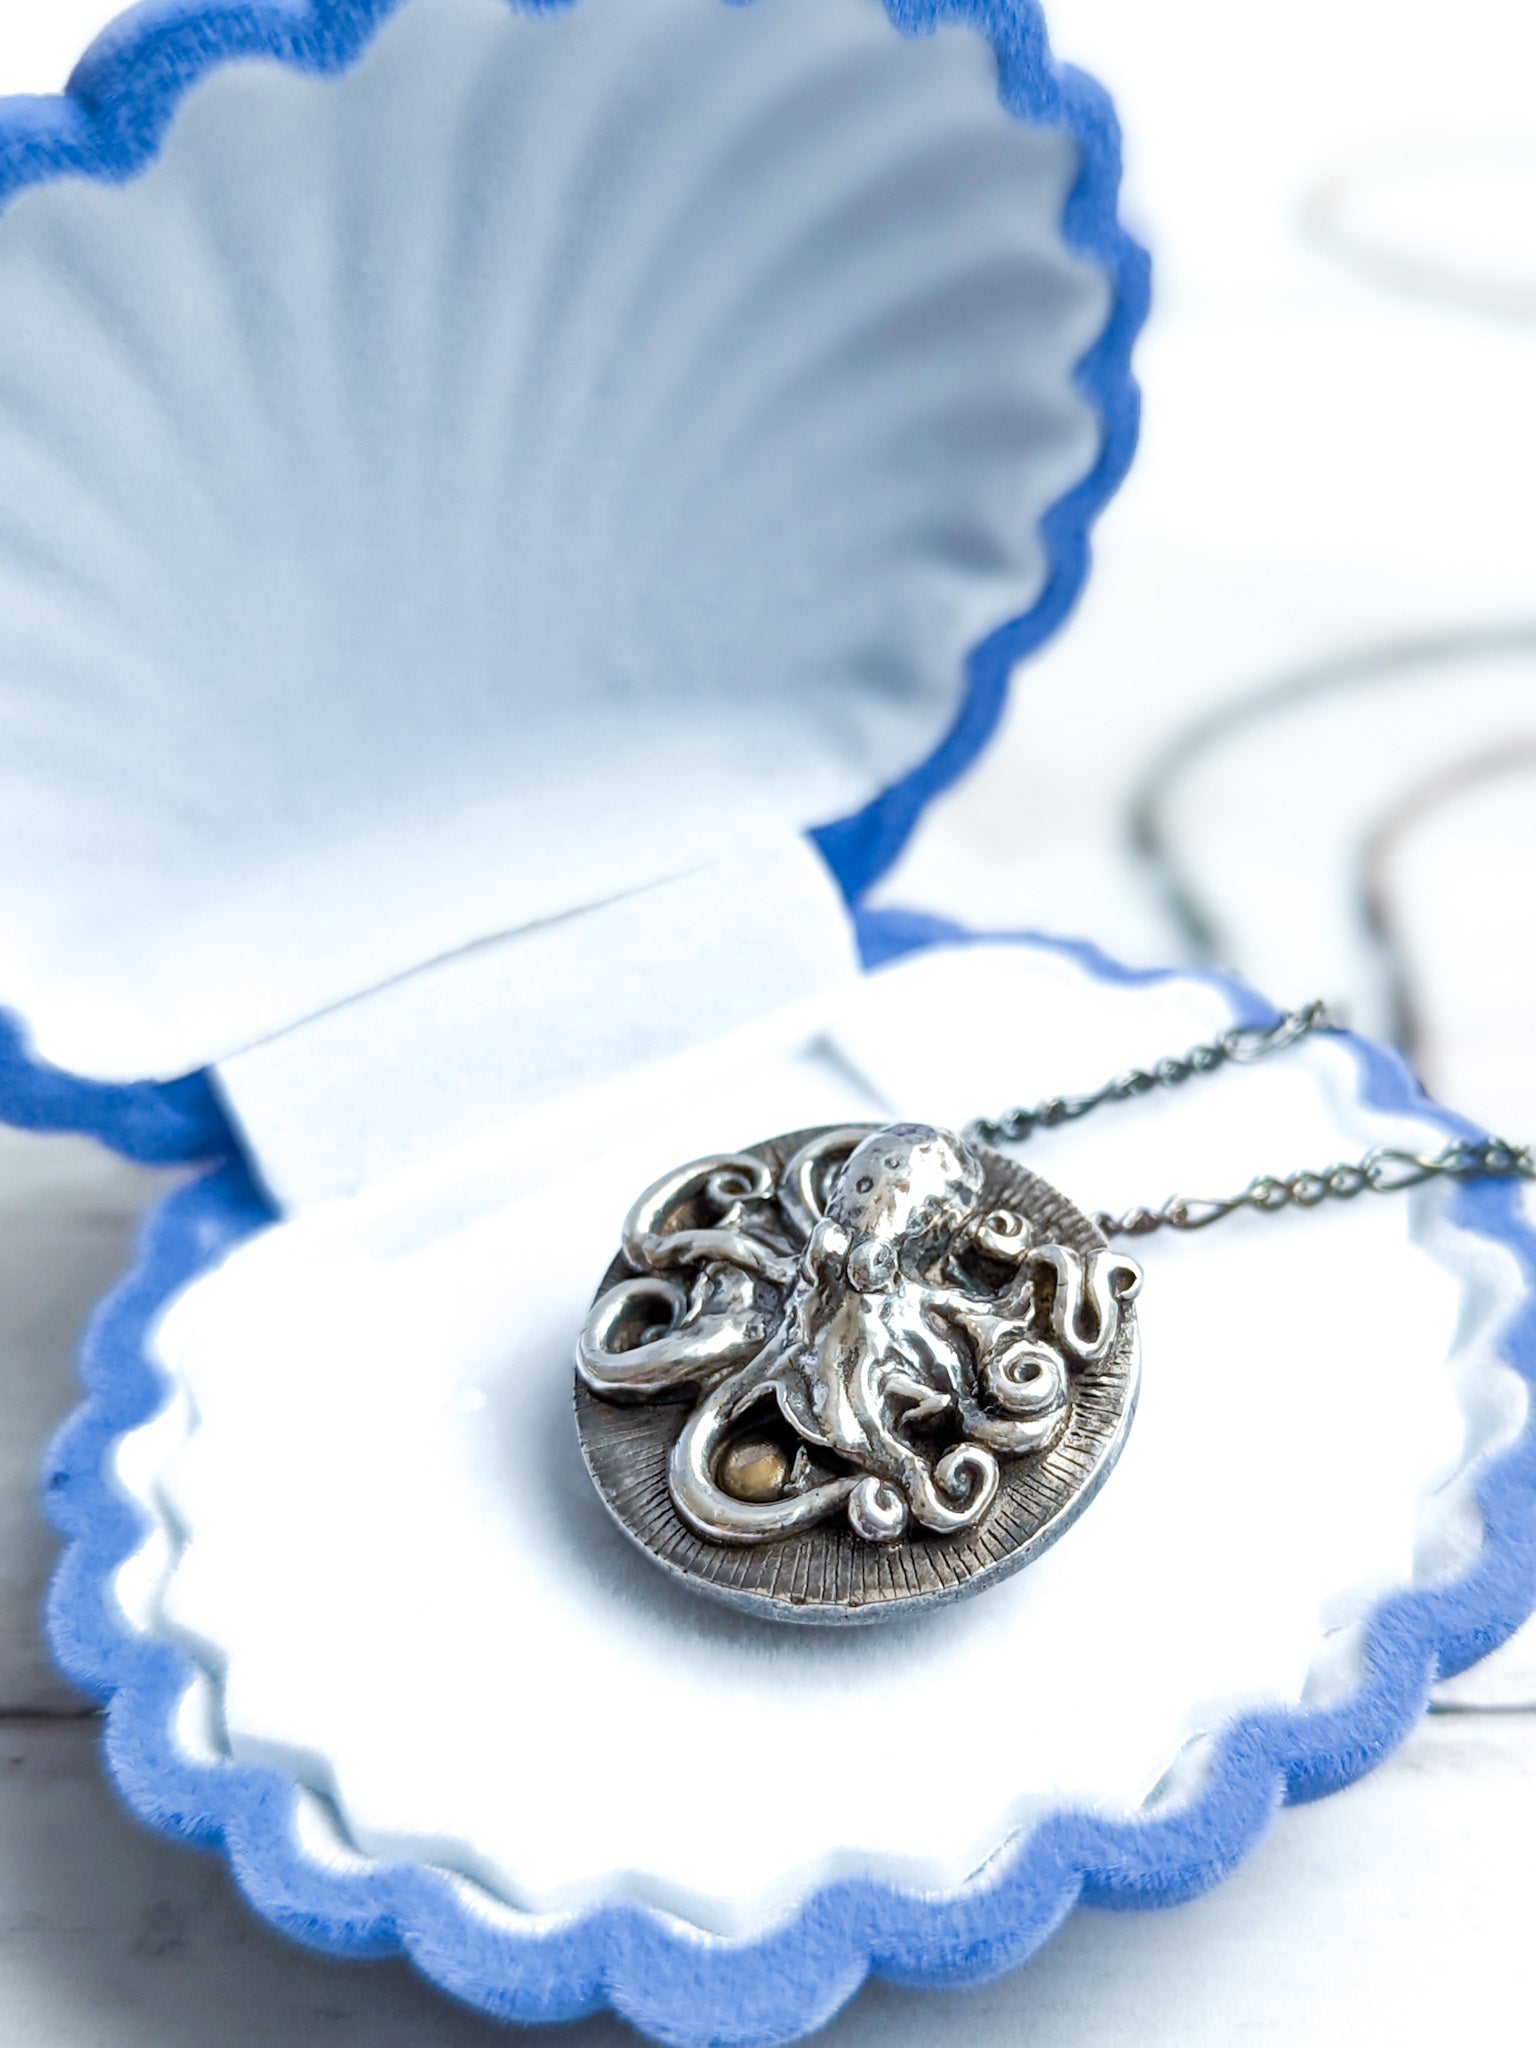 Scientifically accurate silver octopus necklace